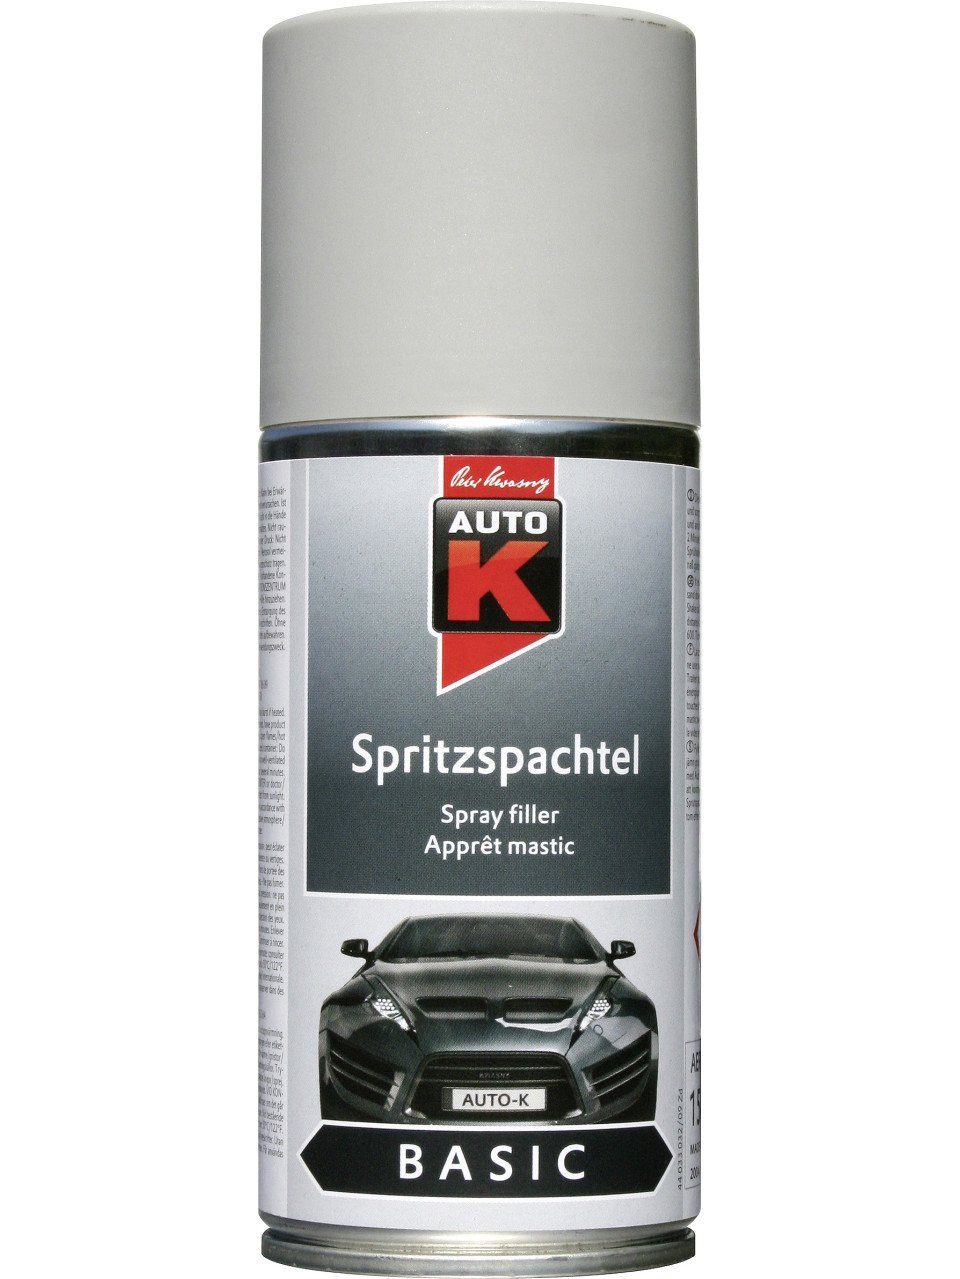 Auto-K 150ml Basic Breitspachtel Spritzspachtel grau Auto-K